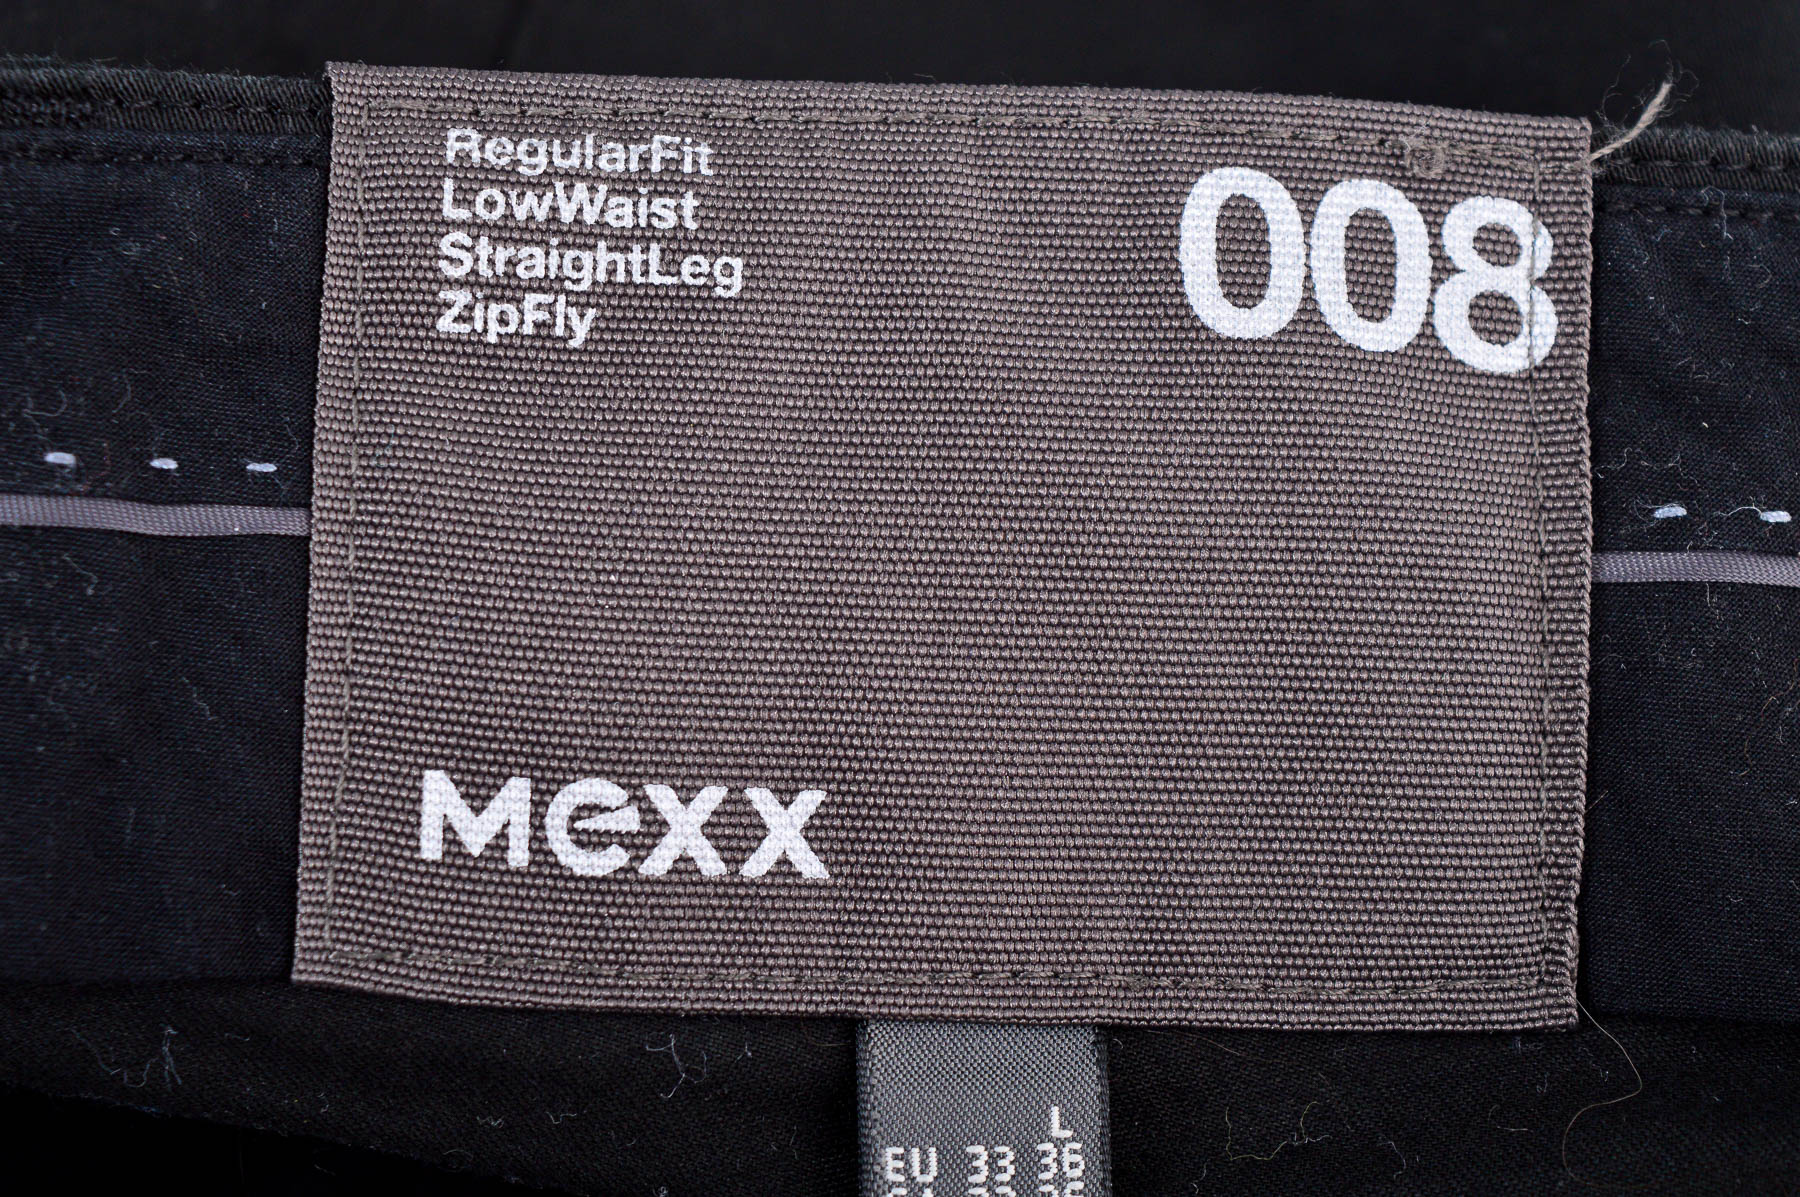 Pantalon pentru bărbați - MEXX - 2